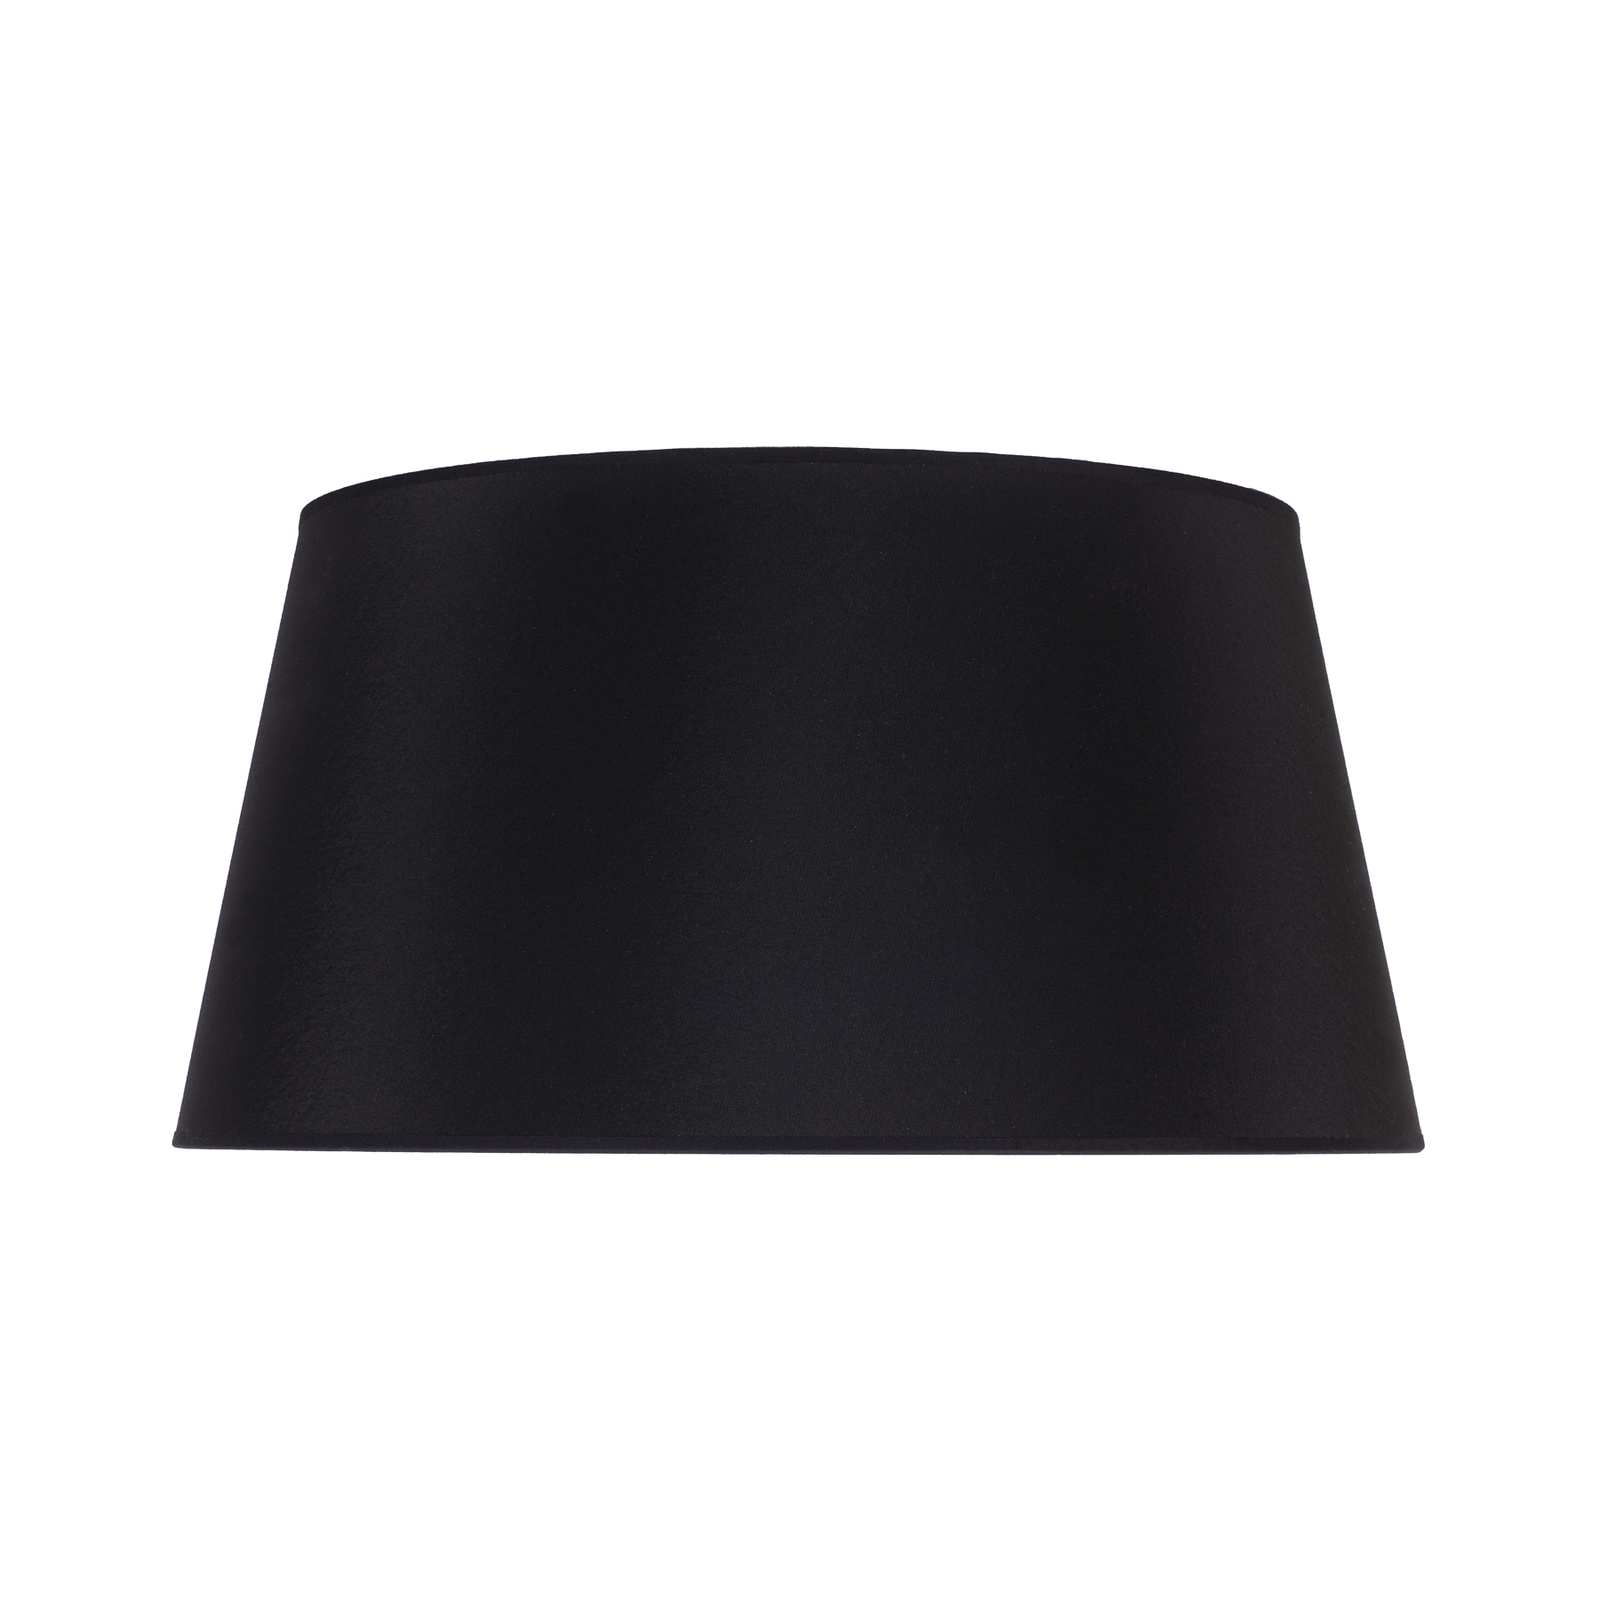 Cone lampshade height 22.5 cm, black chintz